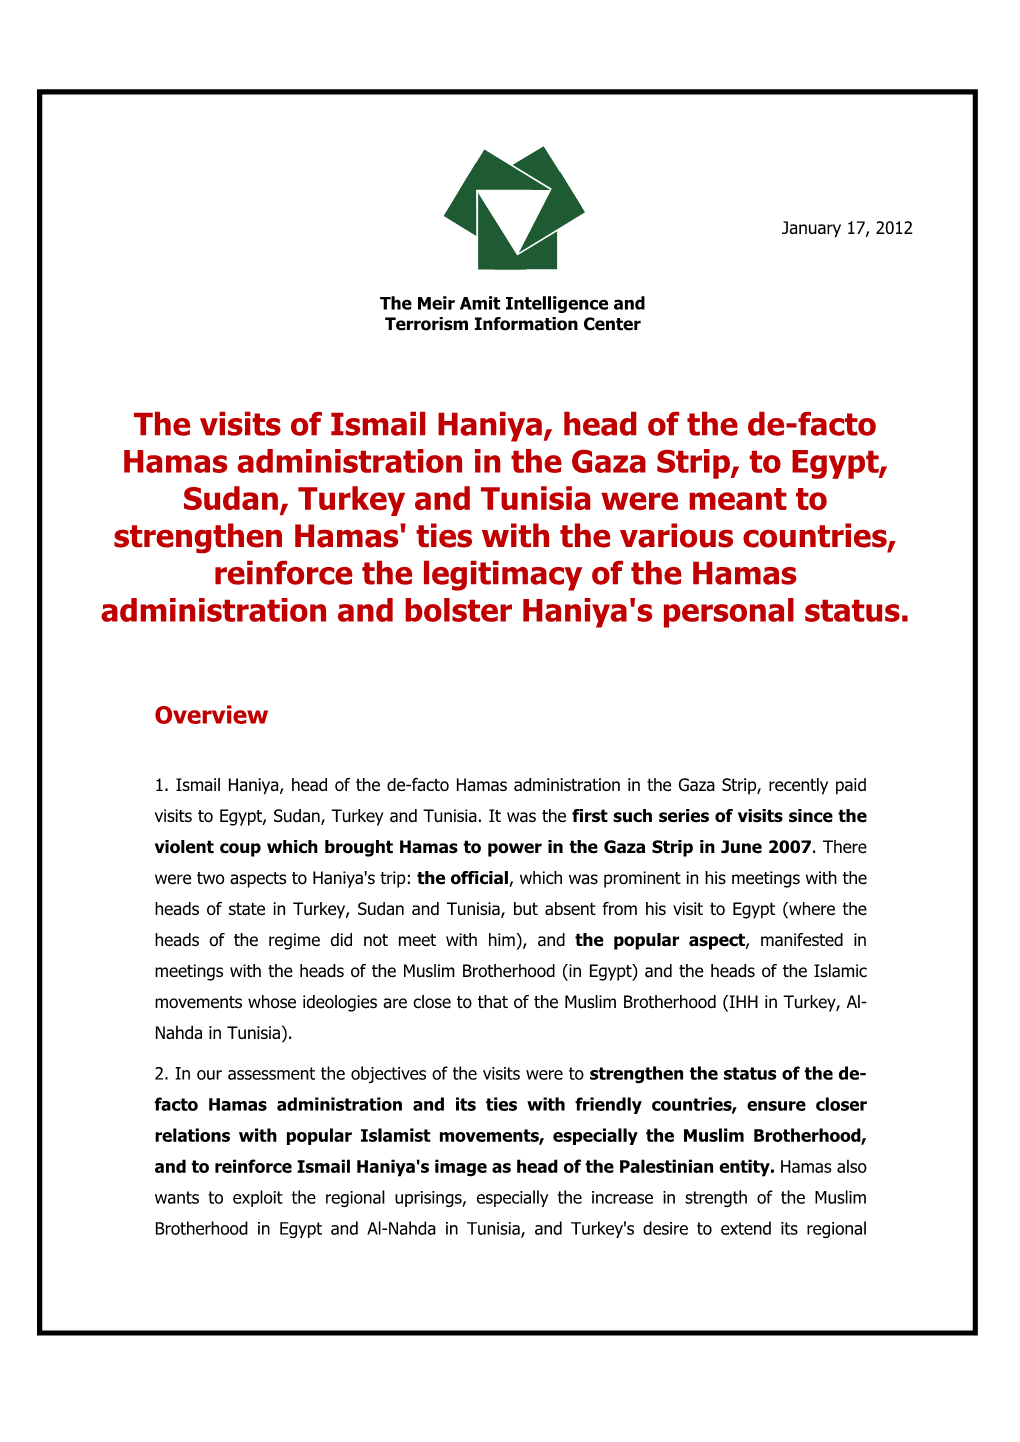 The Visits of Ismail Haniya to Egypt, Sudan, Turkey and Tunisia